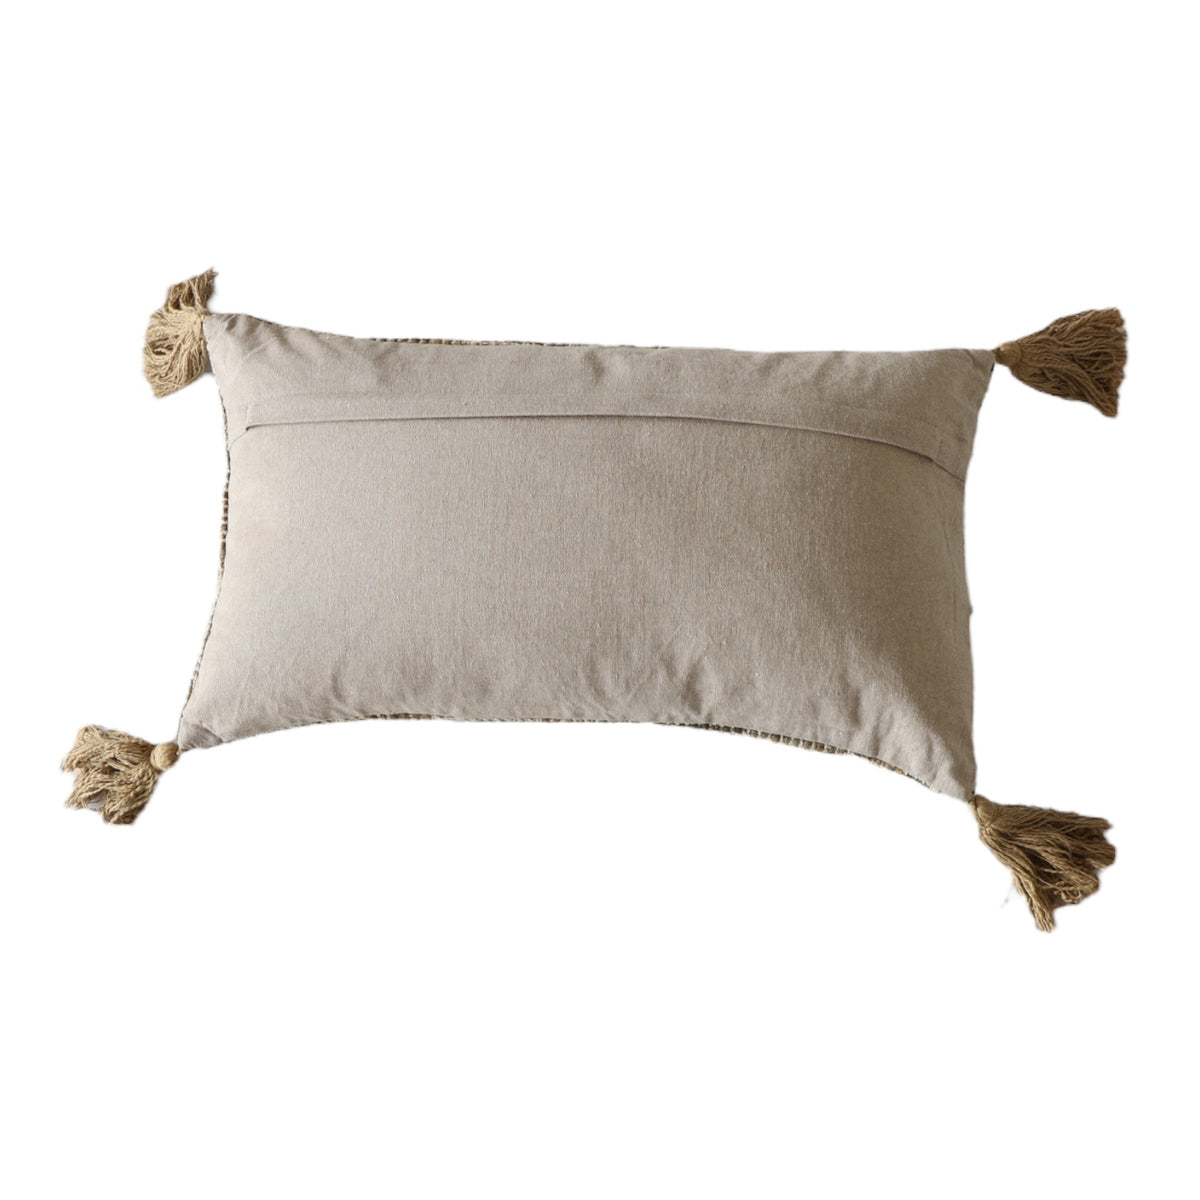 Wheat Fields Woven Lumbar Pillow With Tassels - Holistic Habitat 